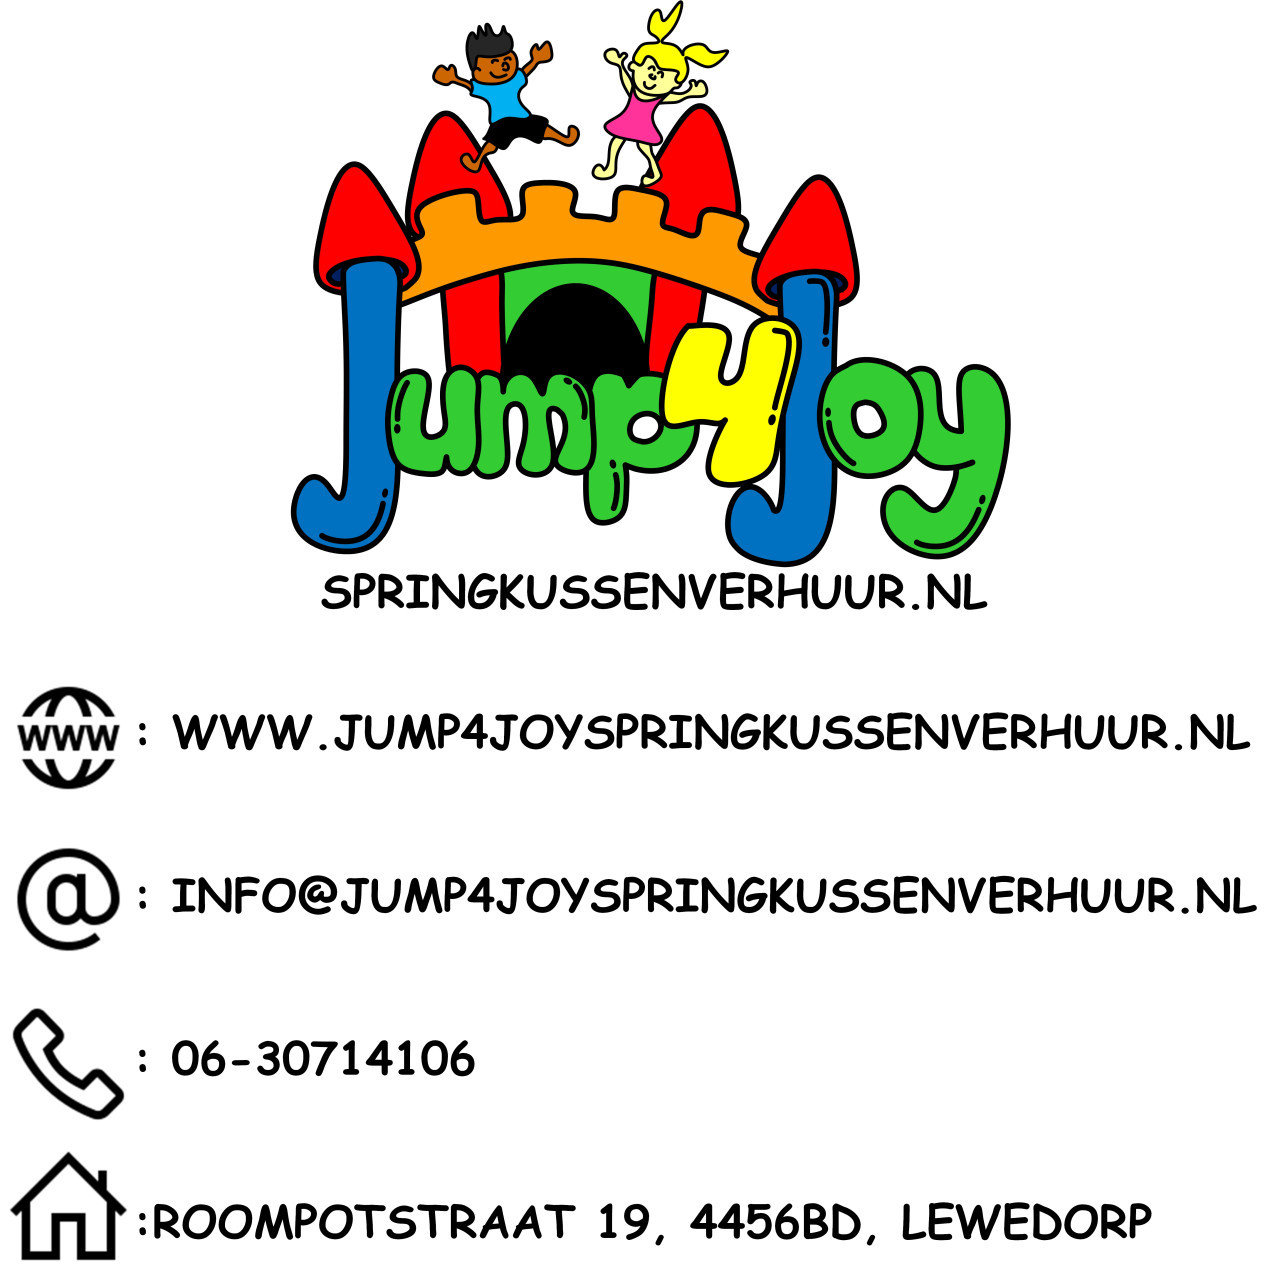 Abraham/Sarah Feestvarken te huur: www.jump4joyspringkussenverhuur.nl